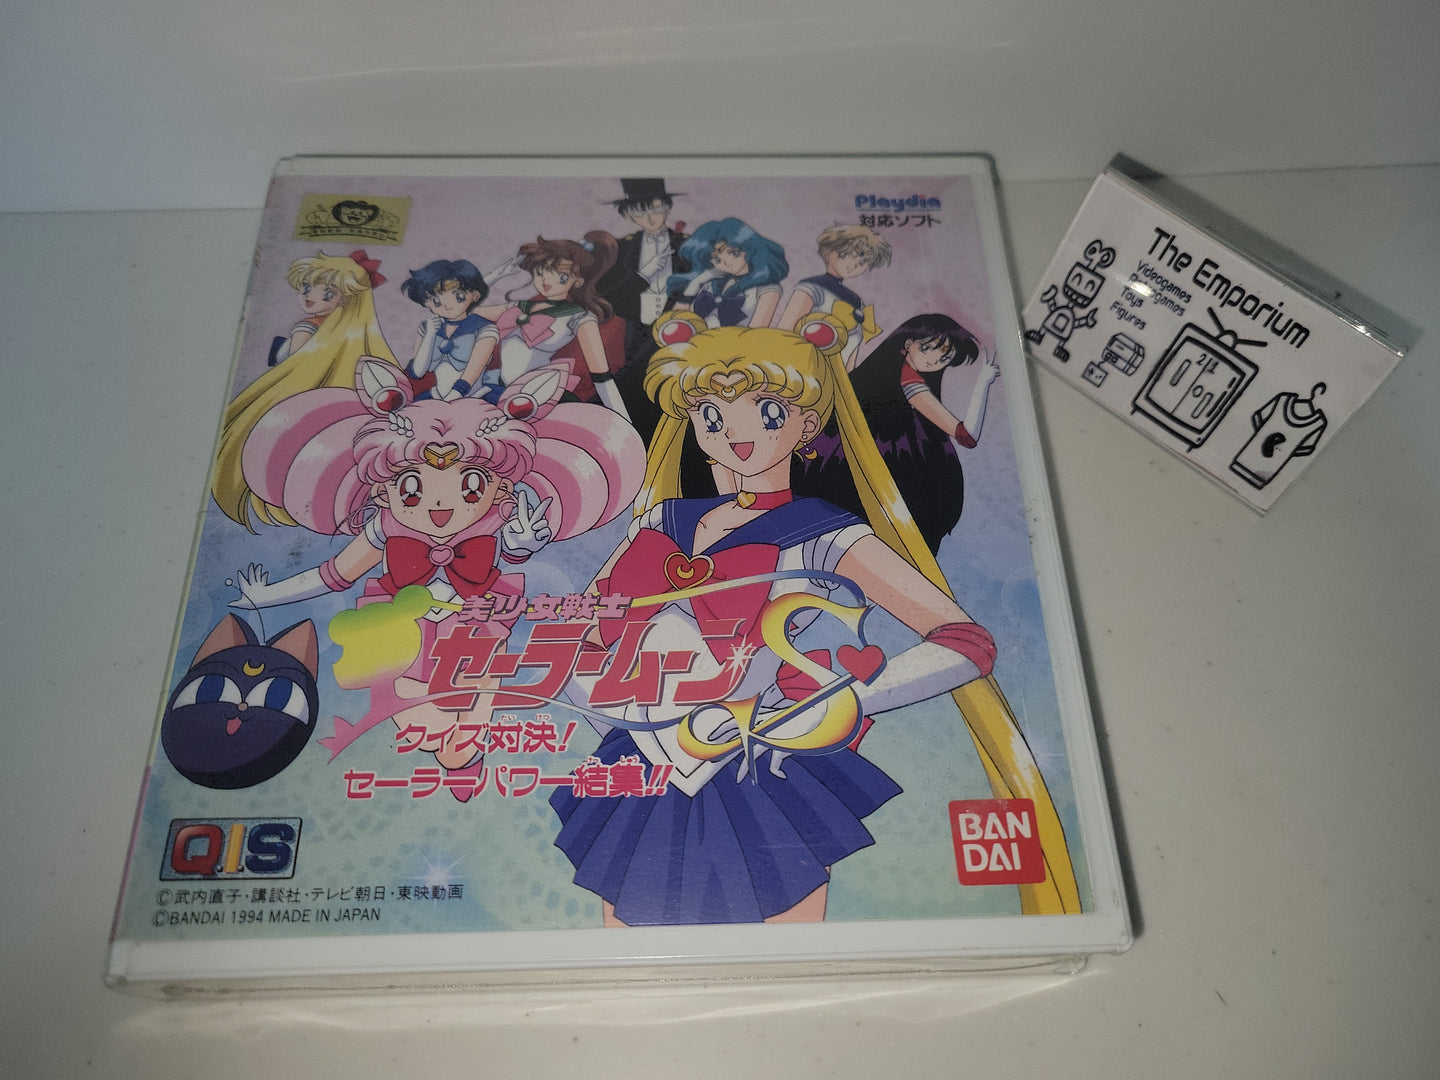 Bishōjo senshi sērāmūn S kuizu taiketsu sērāpawā kesshū / Pretty Guardian Sailor Moon S Quiz Showdown Sailor Power Gathers - Bandai Playdia